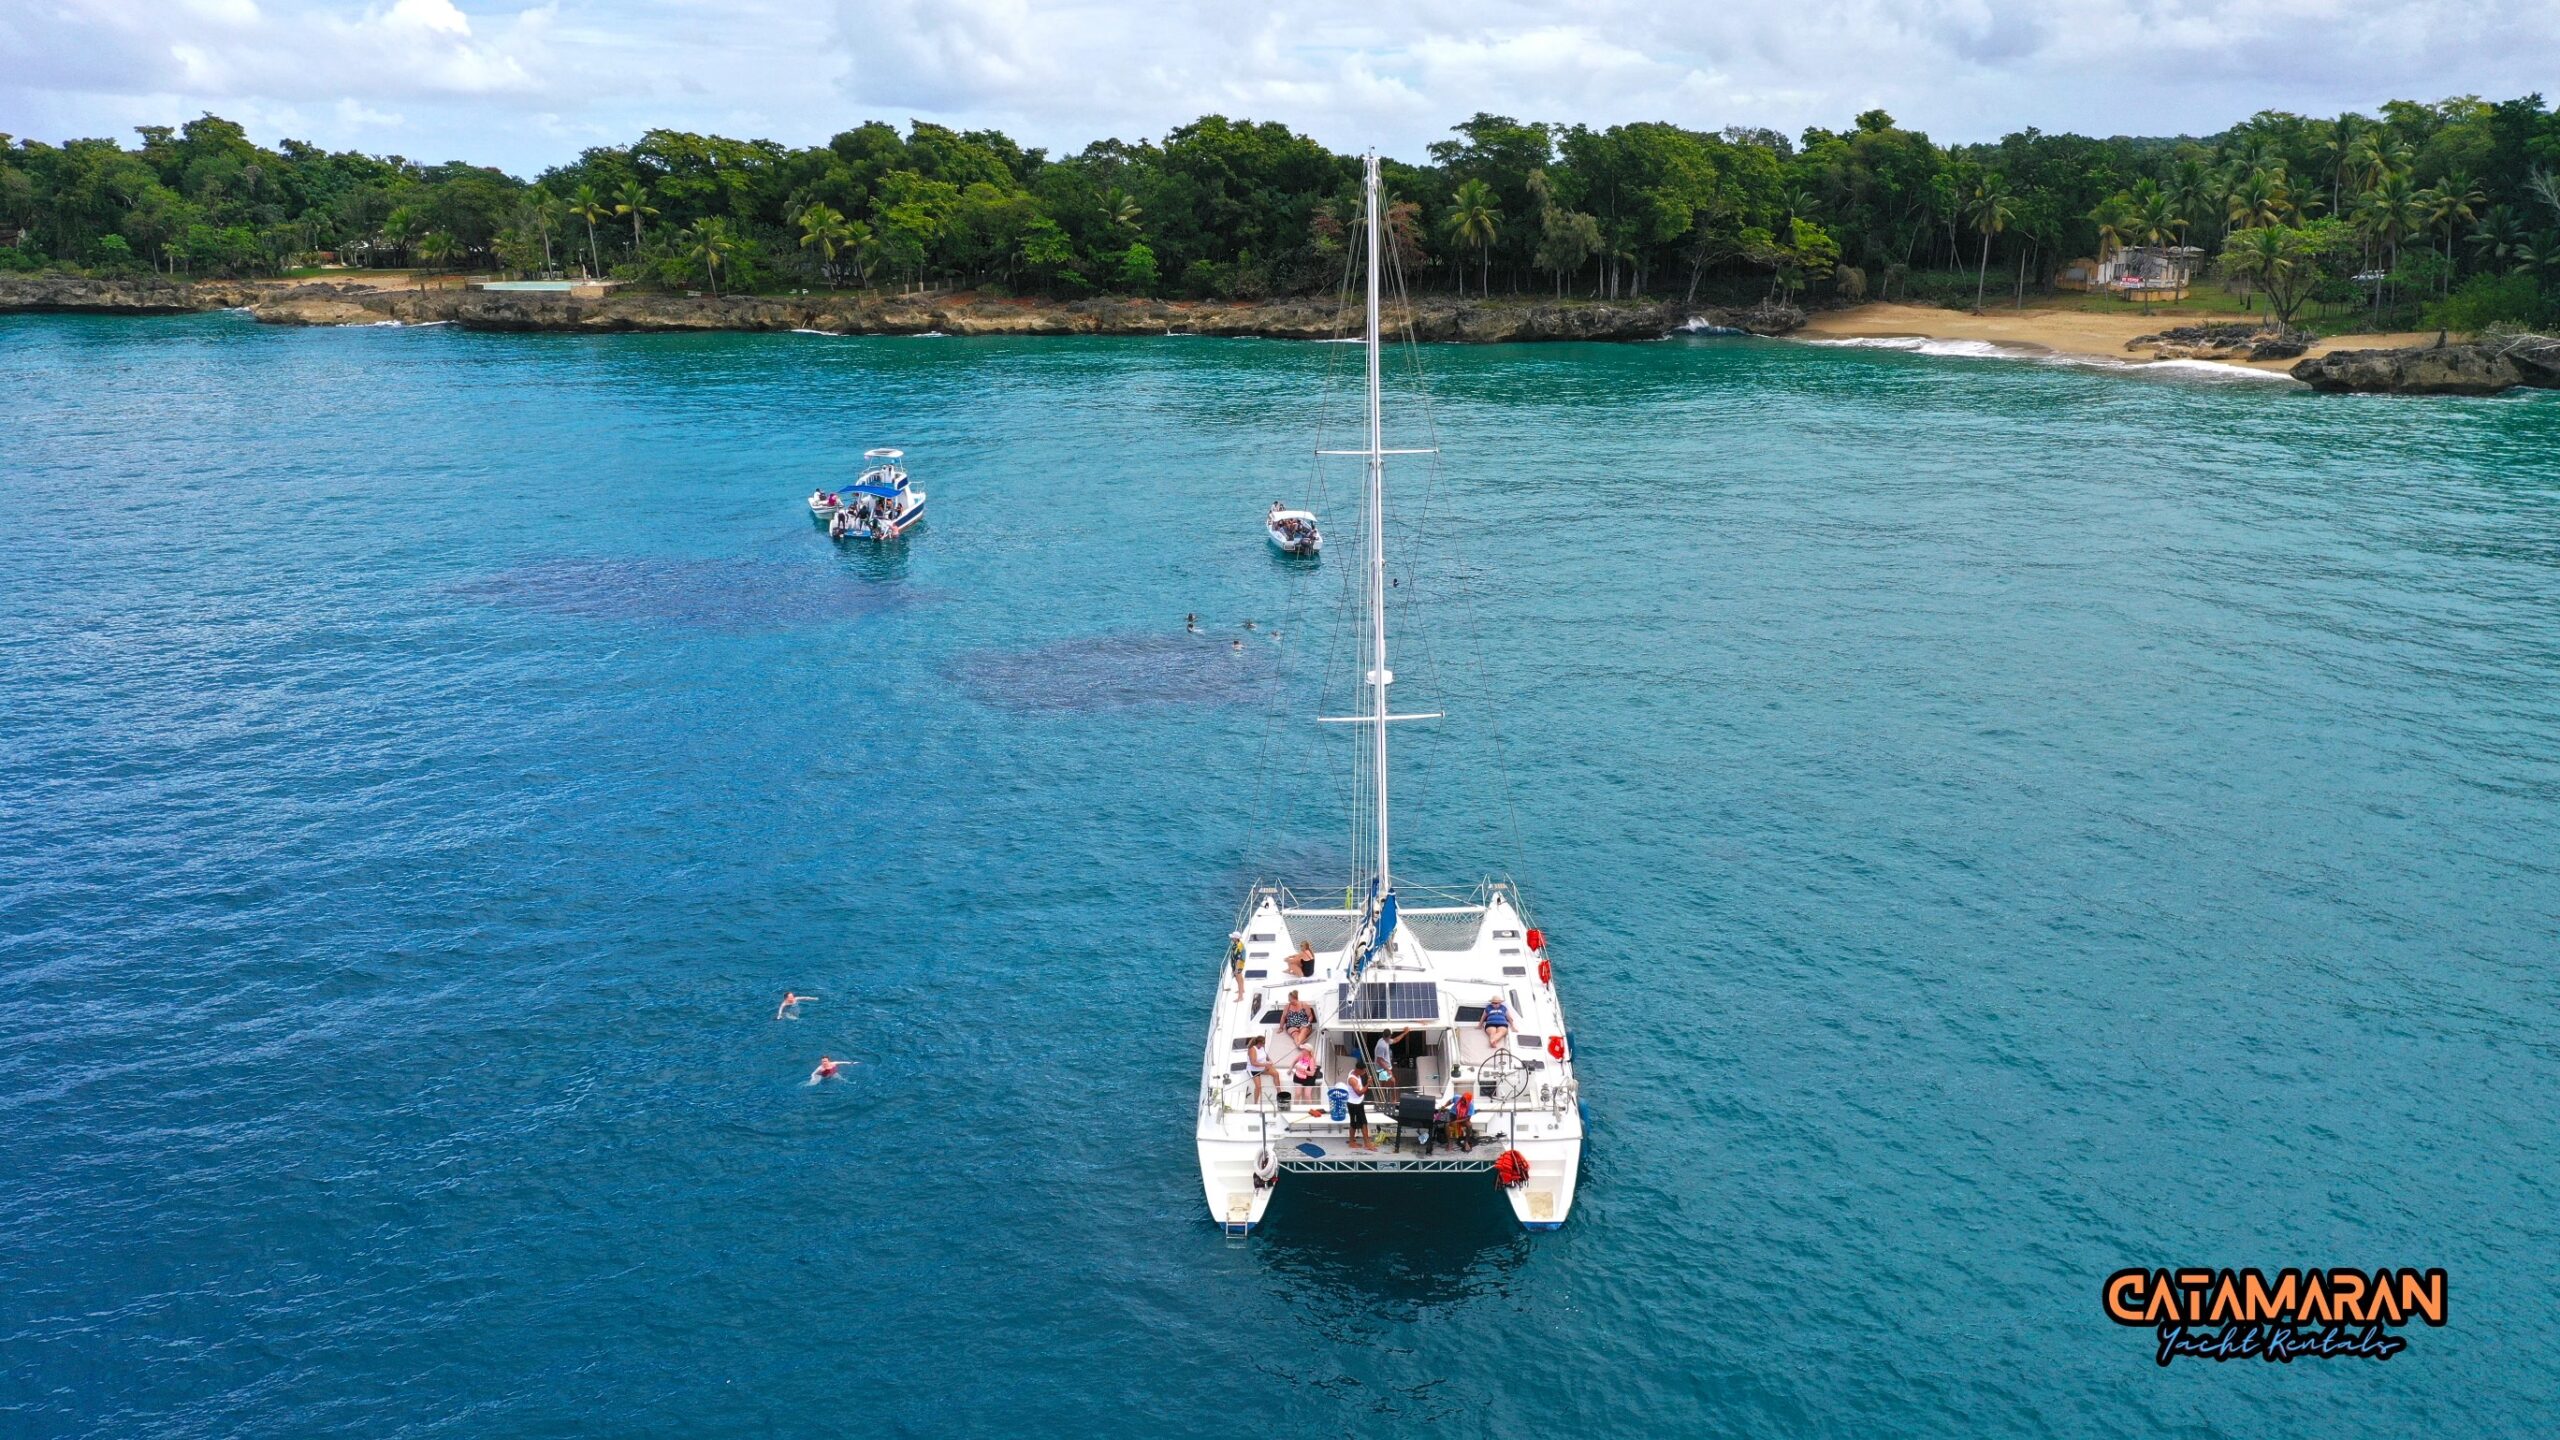 A Sosua catamaran charter with cruise ship passengers from Taino Bay.